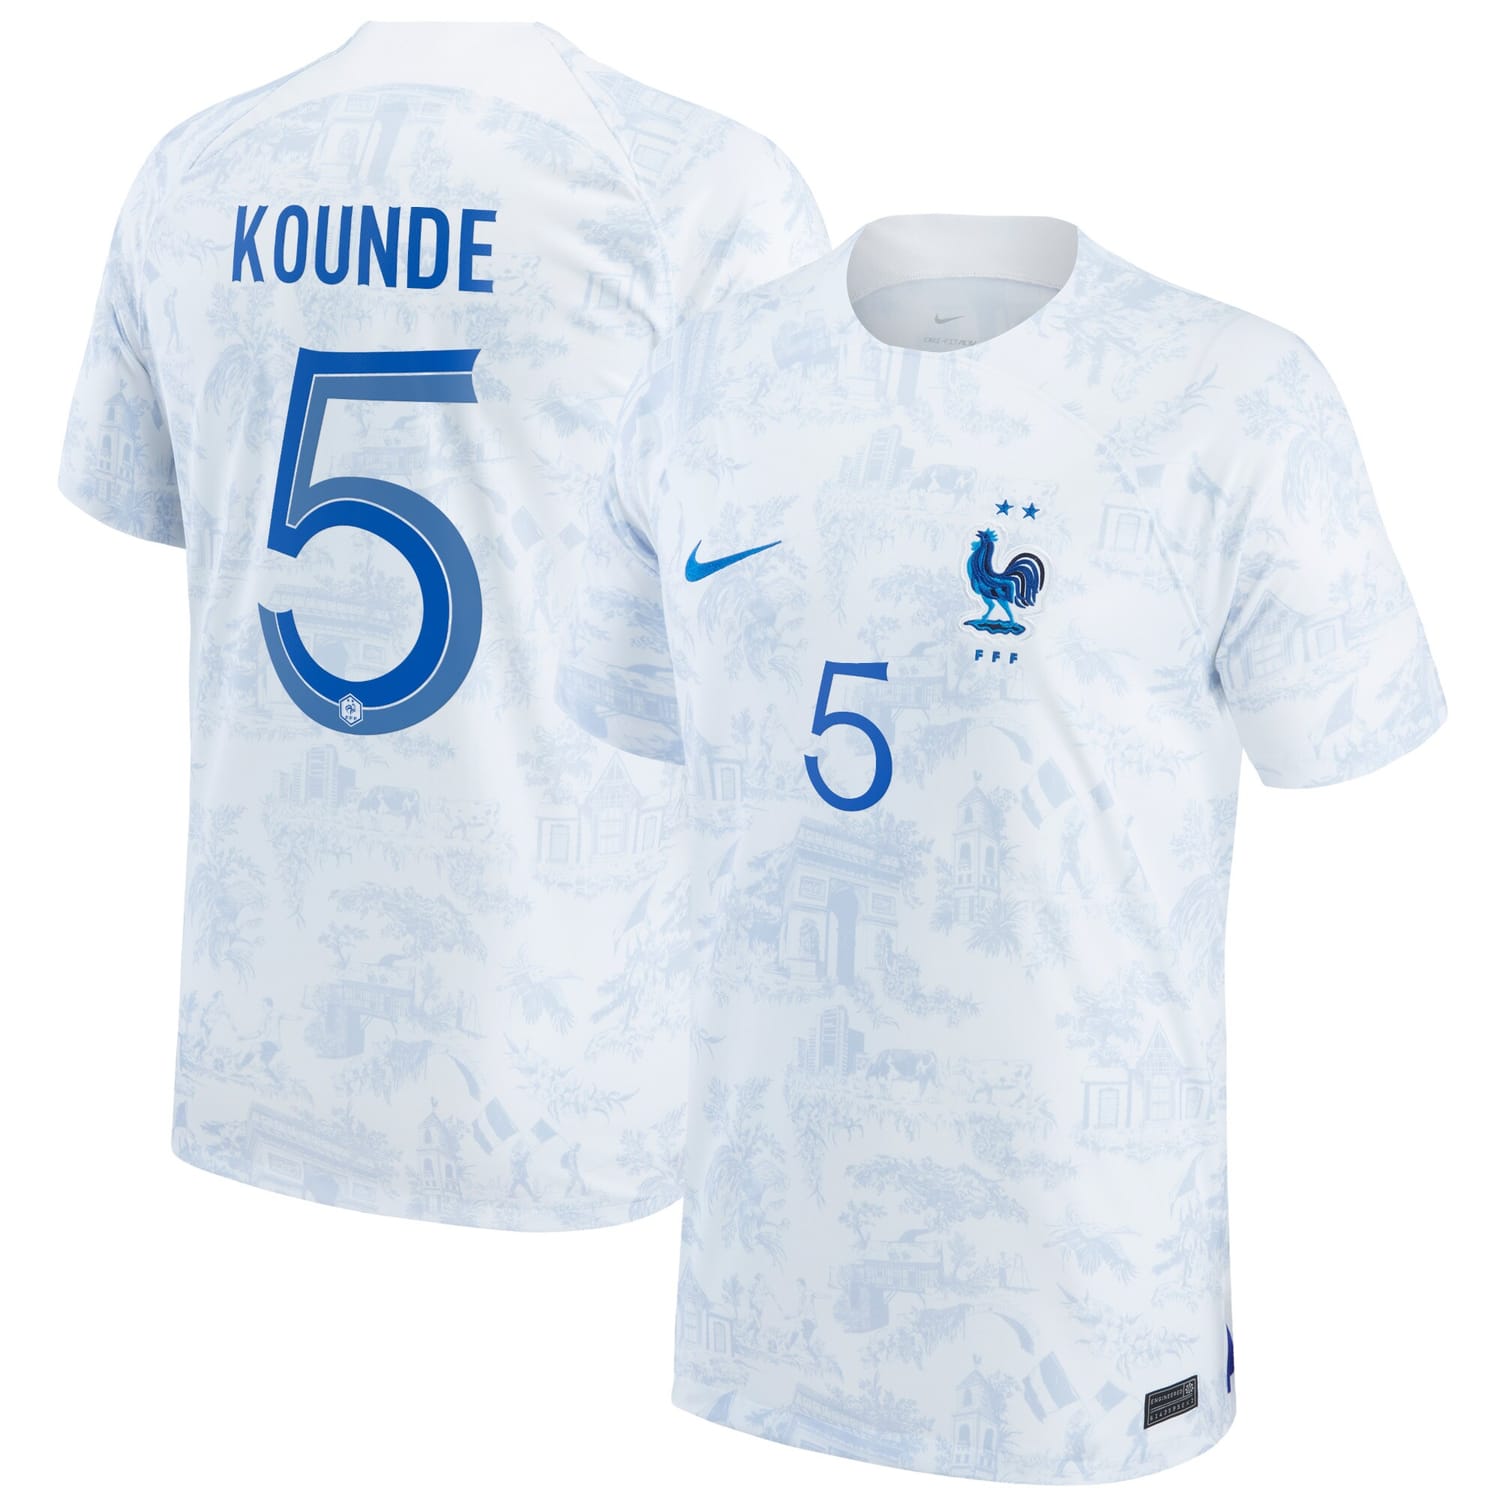 France National Team Away Jersey Shirt 2022 player Jules Koundé printing for Men